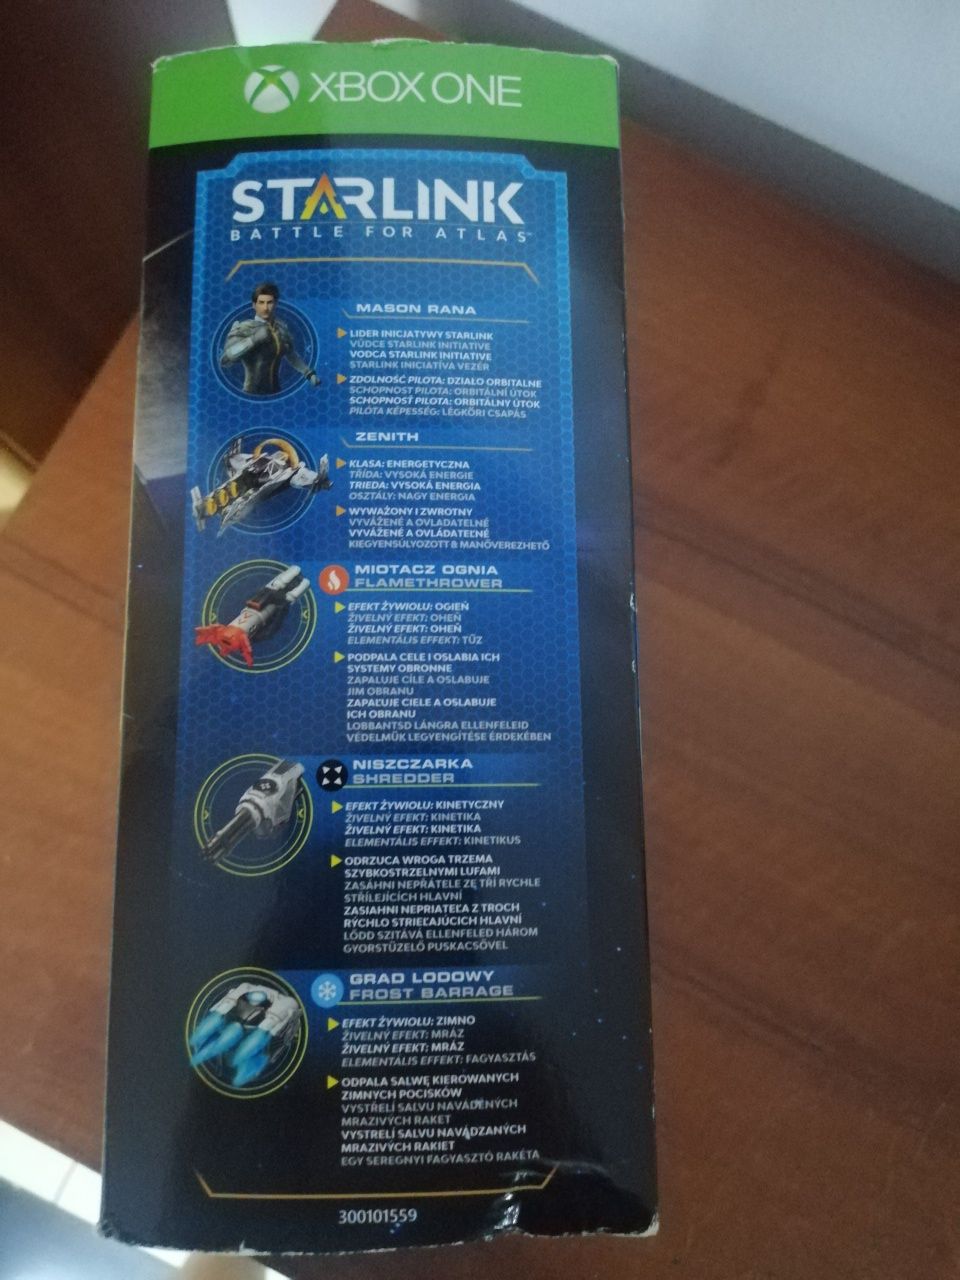 Star link Xbox One